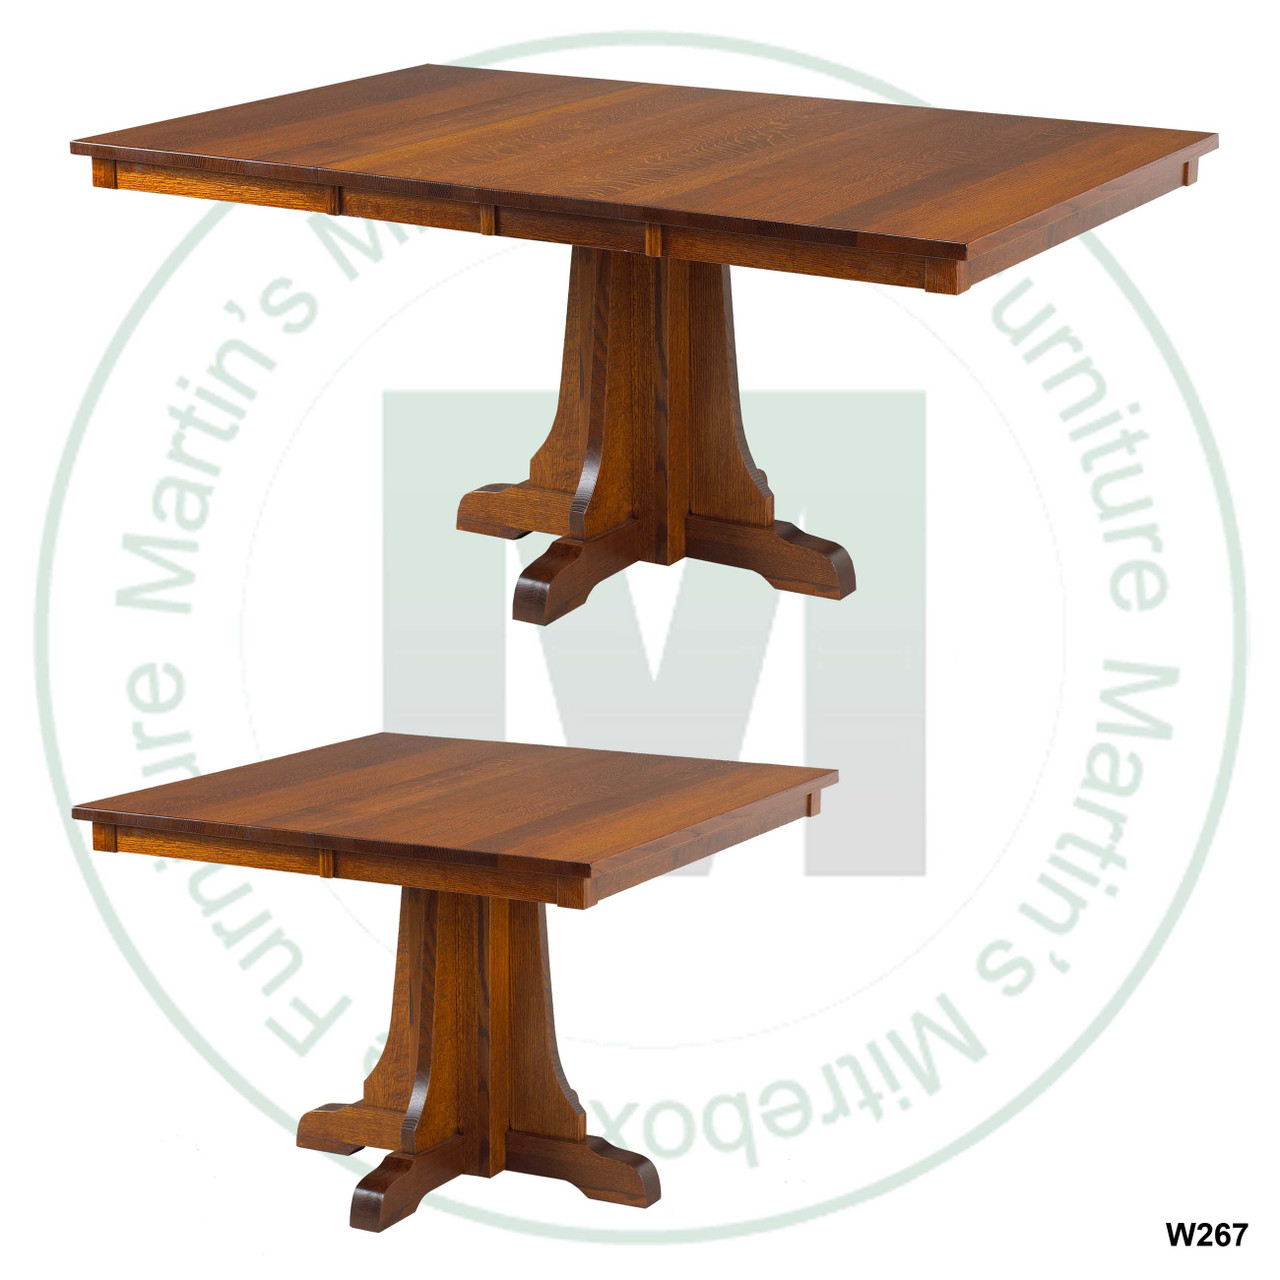 Oak Eastwood Single Pedestal Table 60''D x 60''W x 30''H With 1 - 12'' Leaf